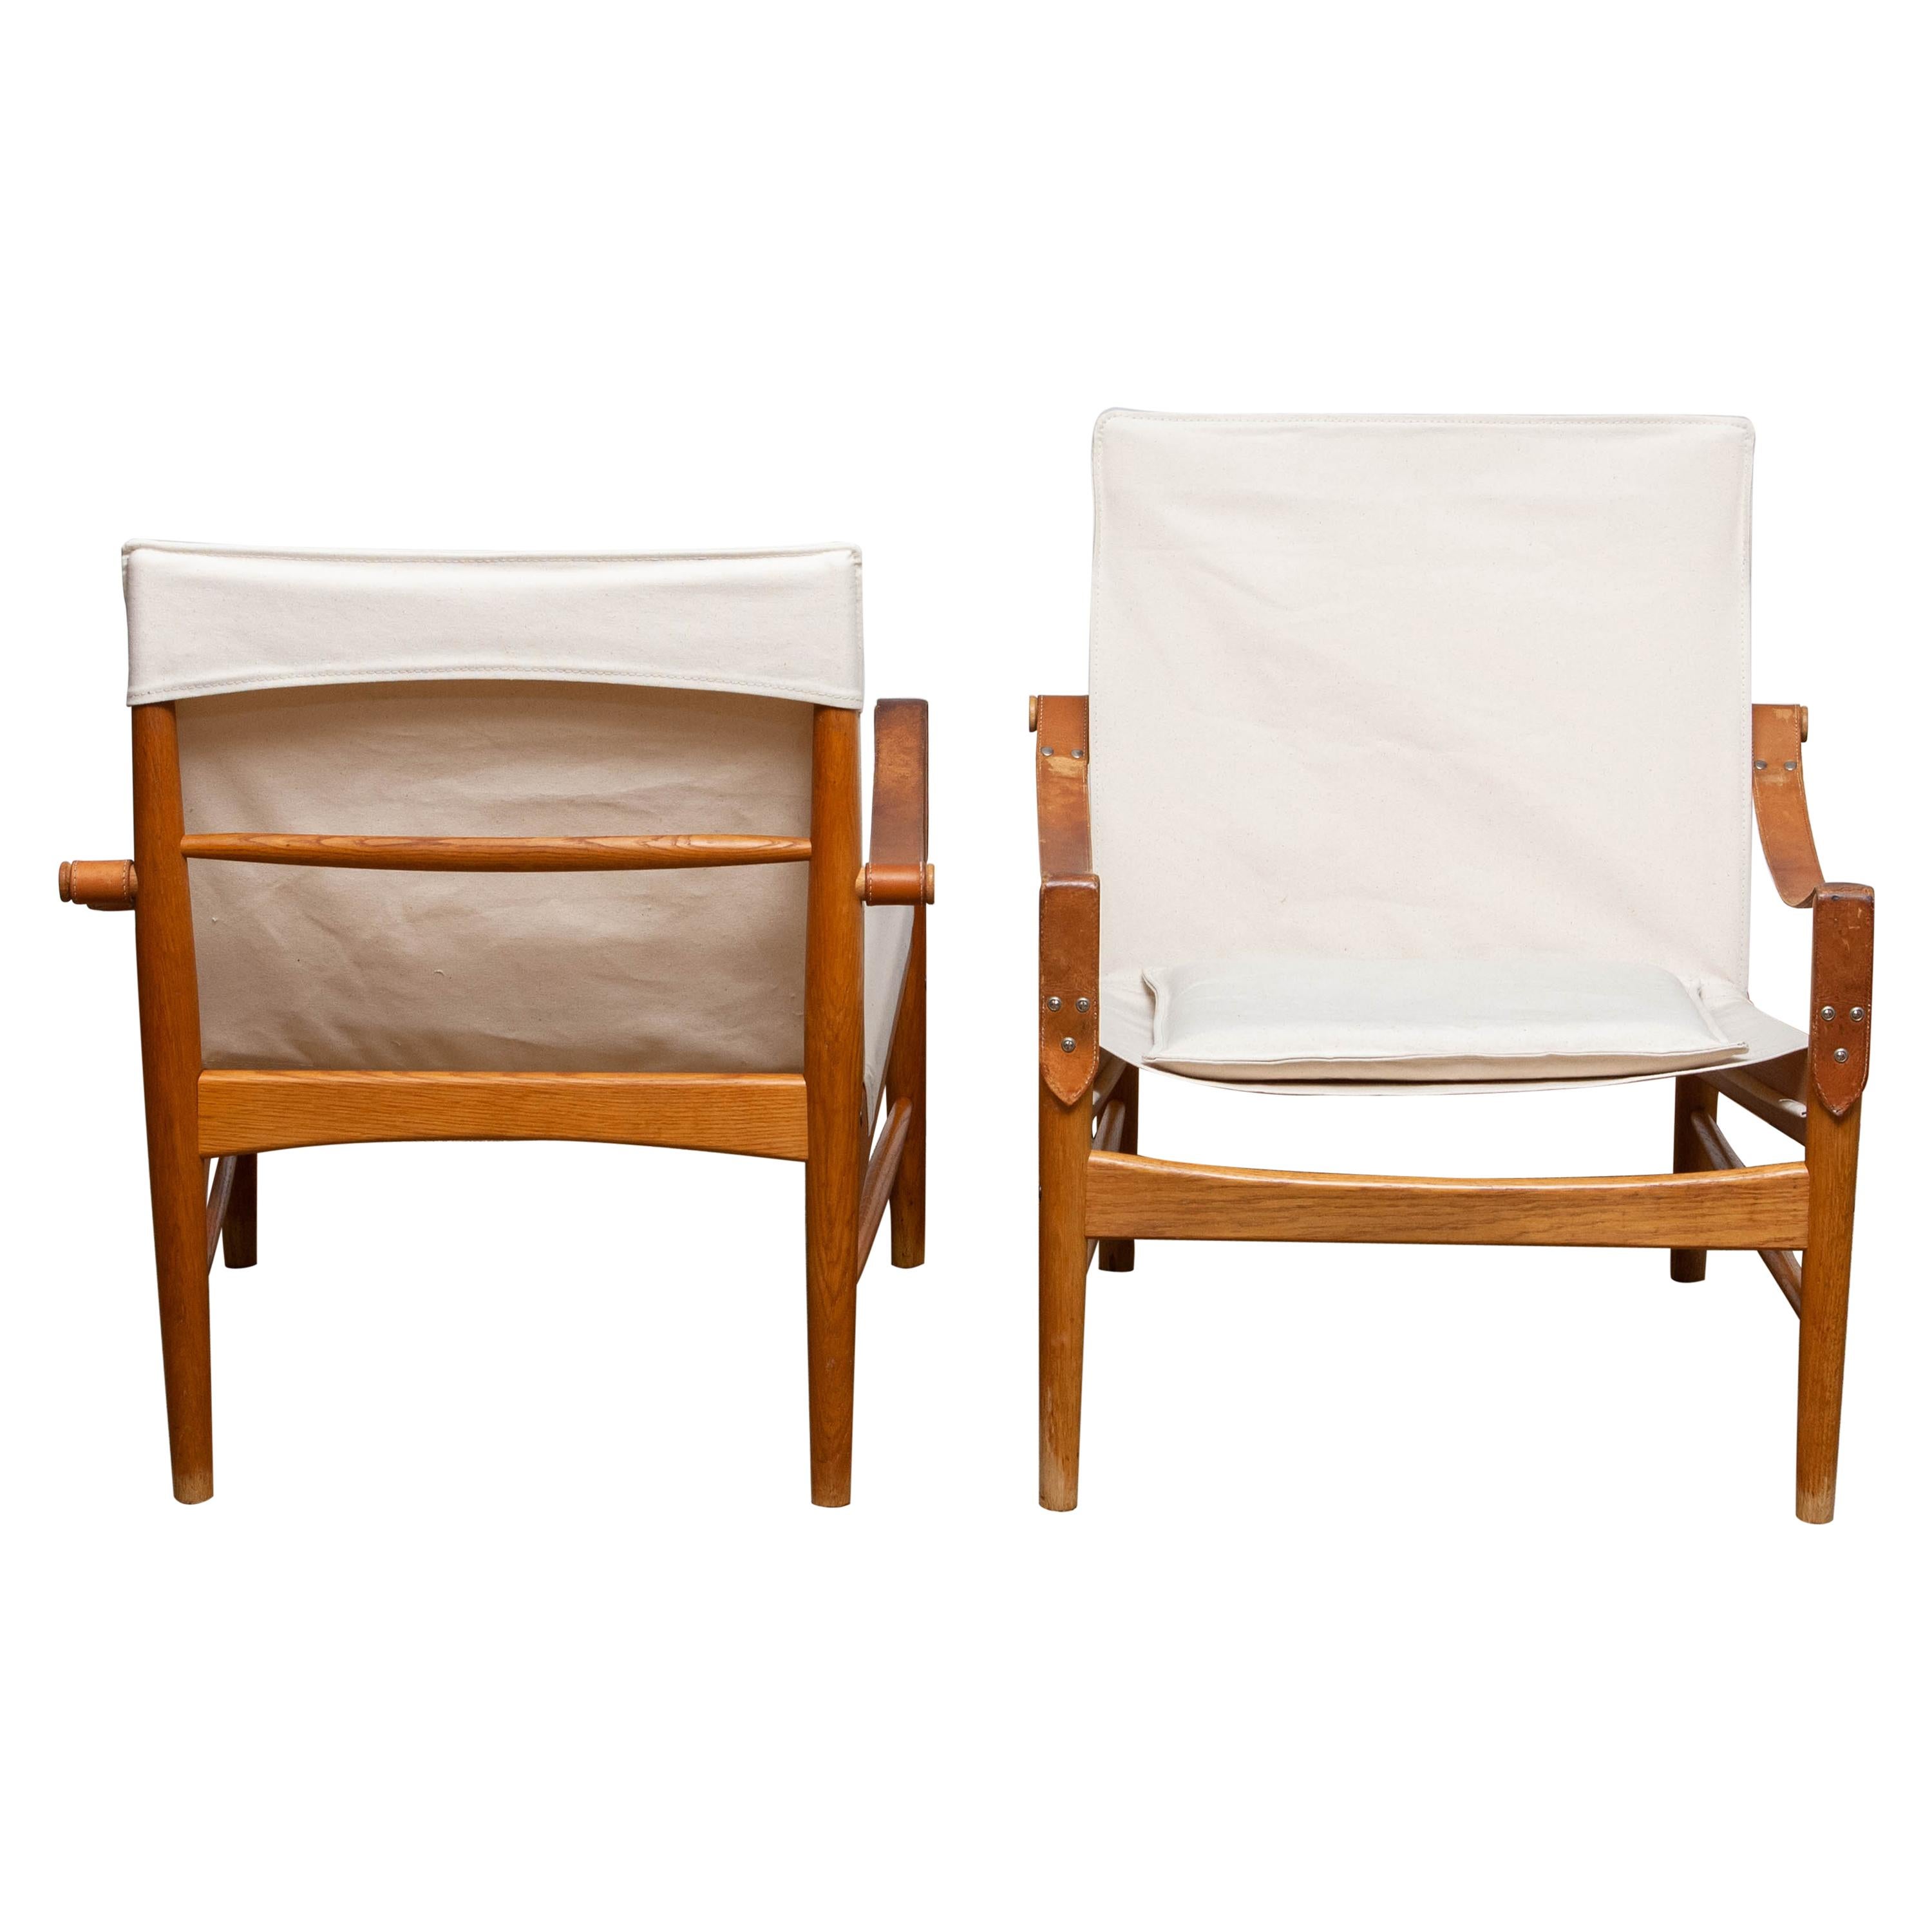 1960s, a Pair of Safari Chairs by Hans Olsen for Viska Möbler in Kinna, Sweden